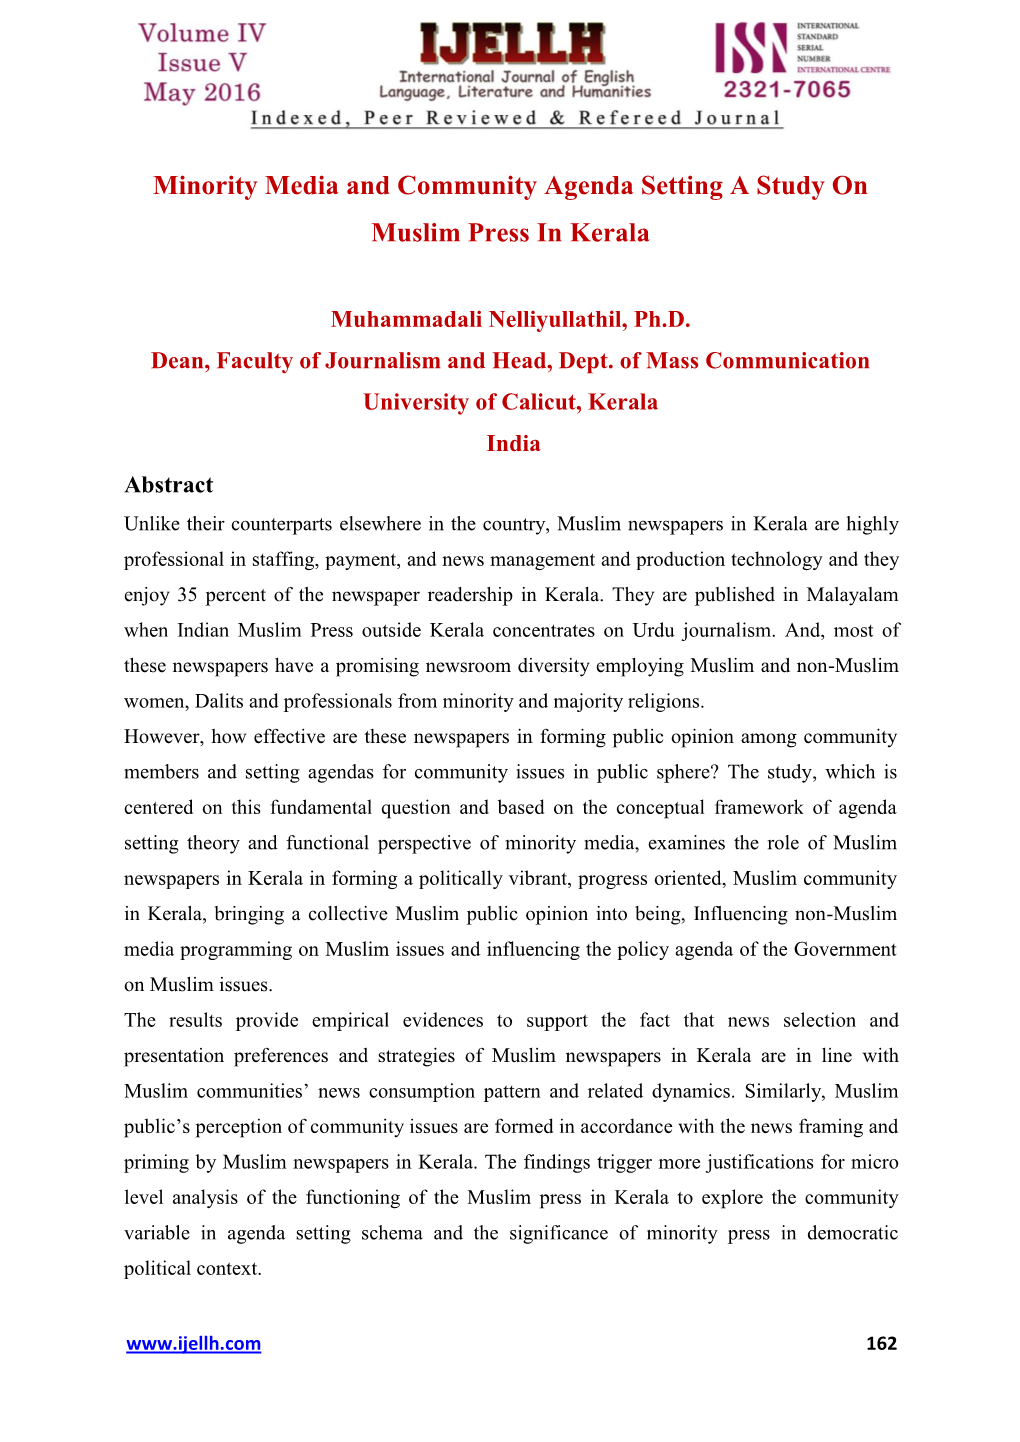 Minority Media and Community Agenda Setting a Study on Muslim Press in Kerala